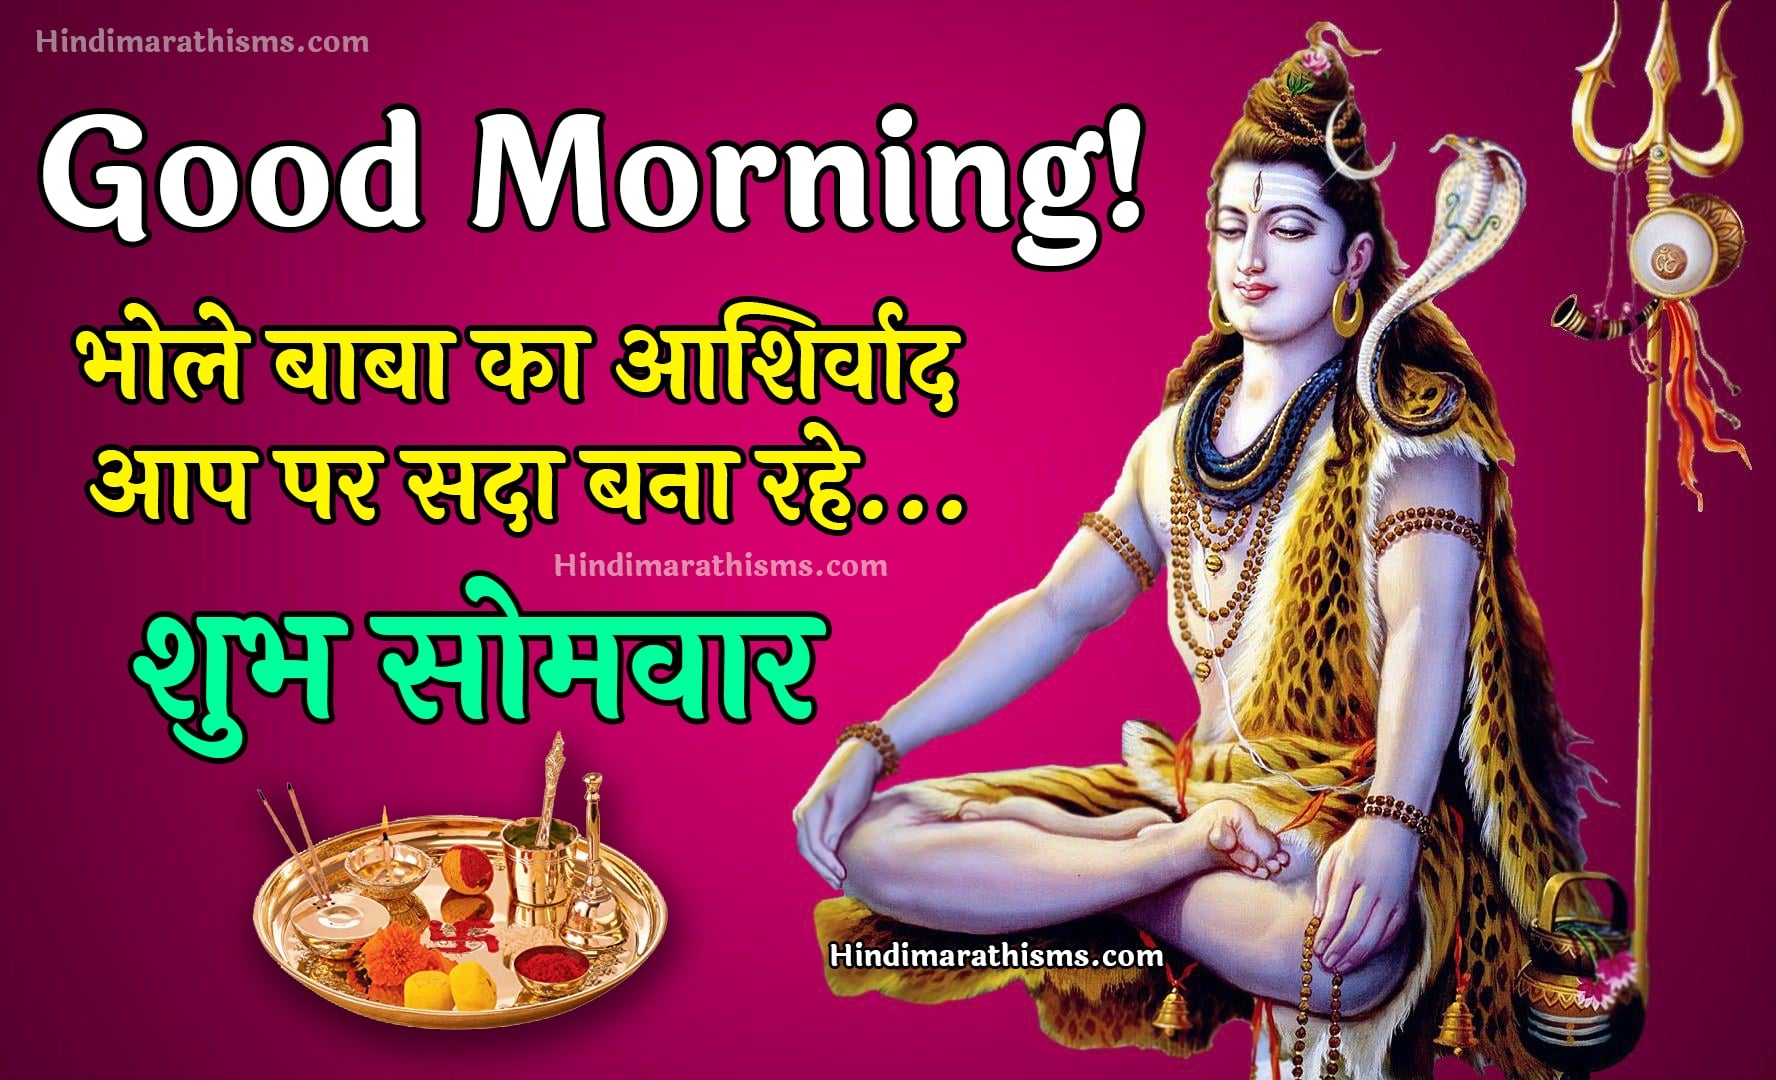 Shubh Somvar Good Morning Images